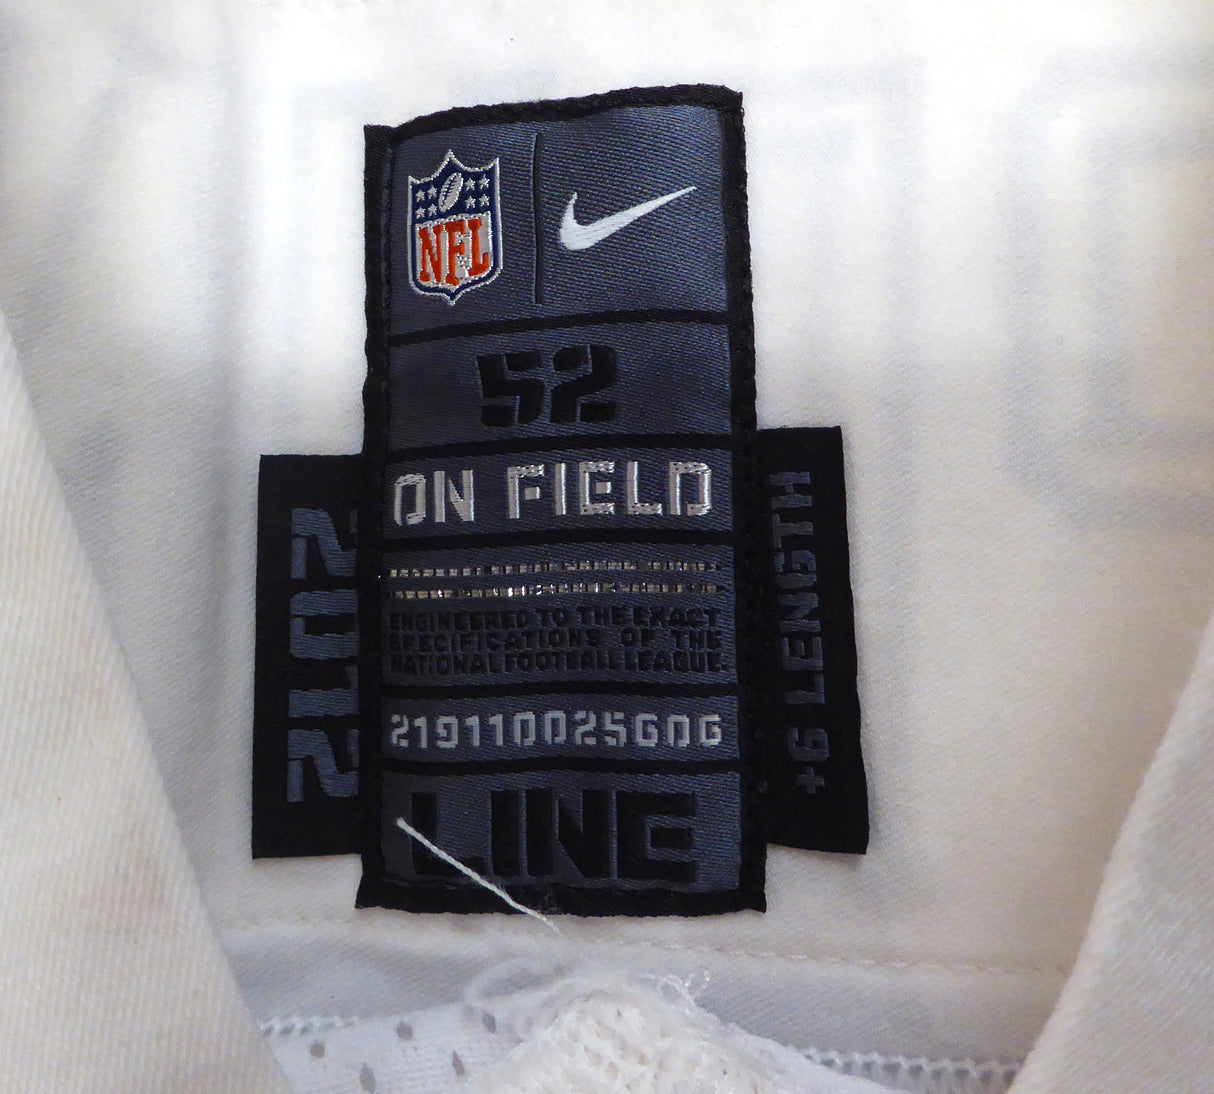 Oakland Raiders Donald Penn Team Issued White Nike Jersey Size 52 SKU #228862